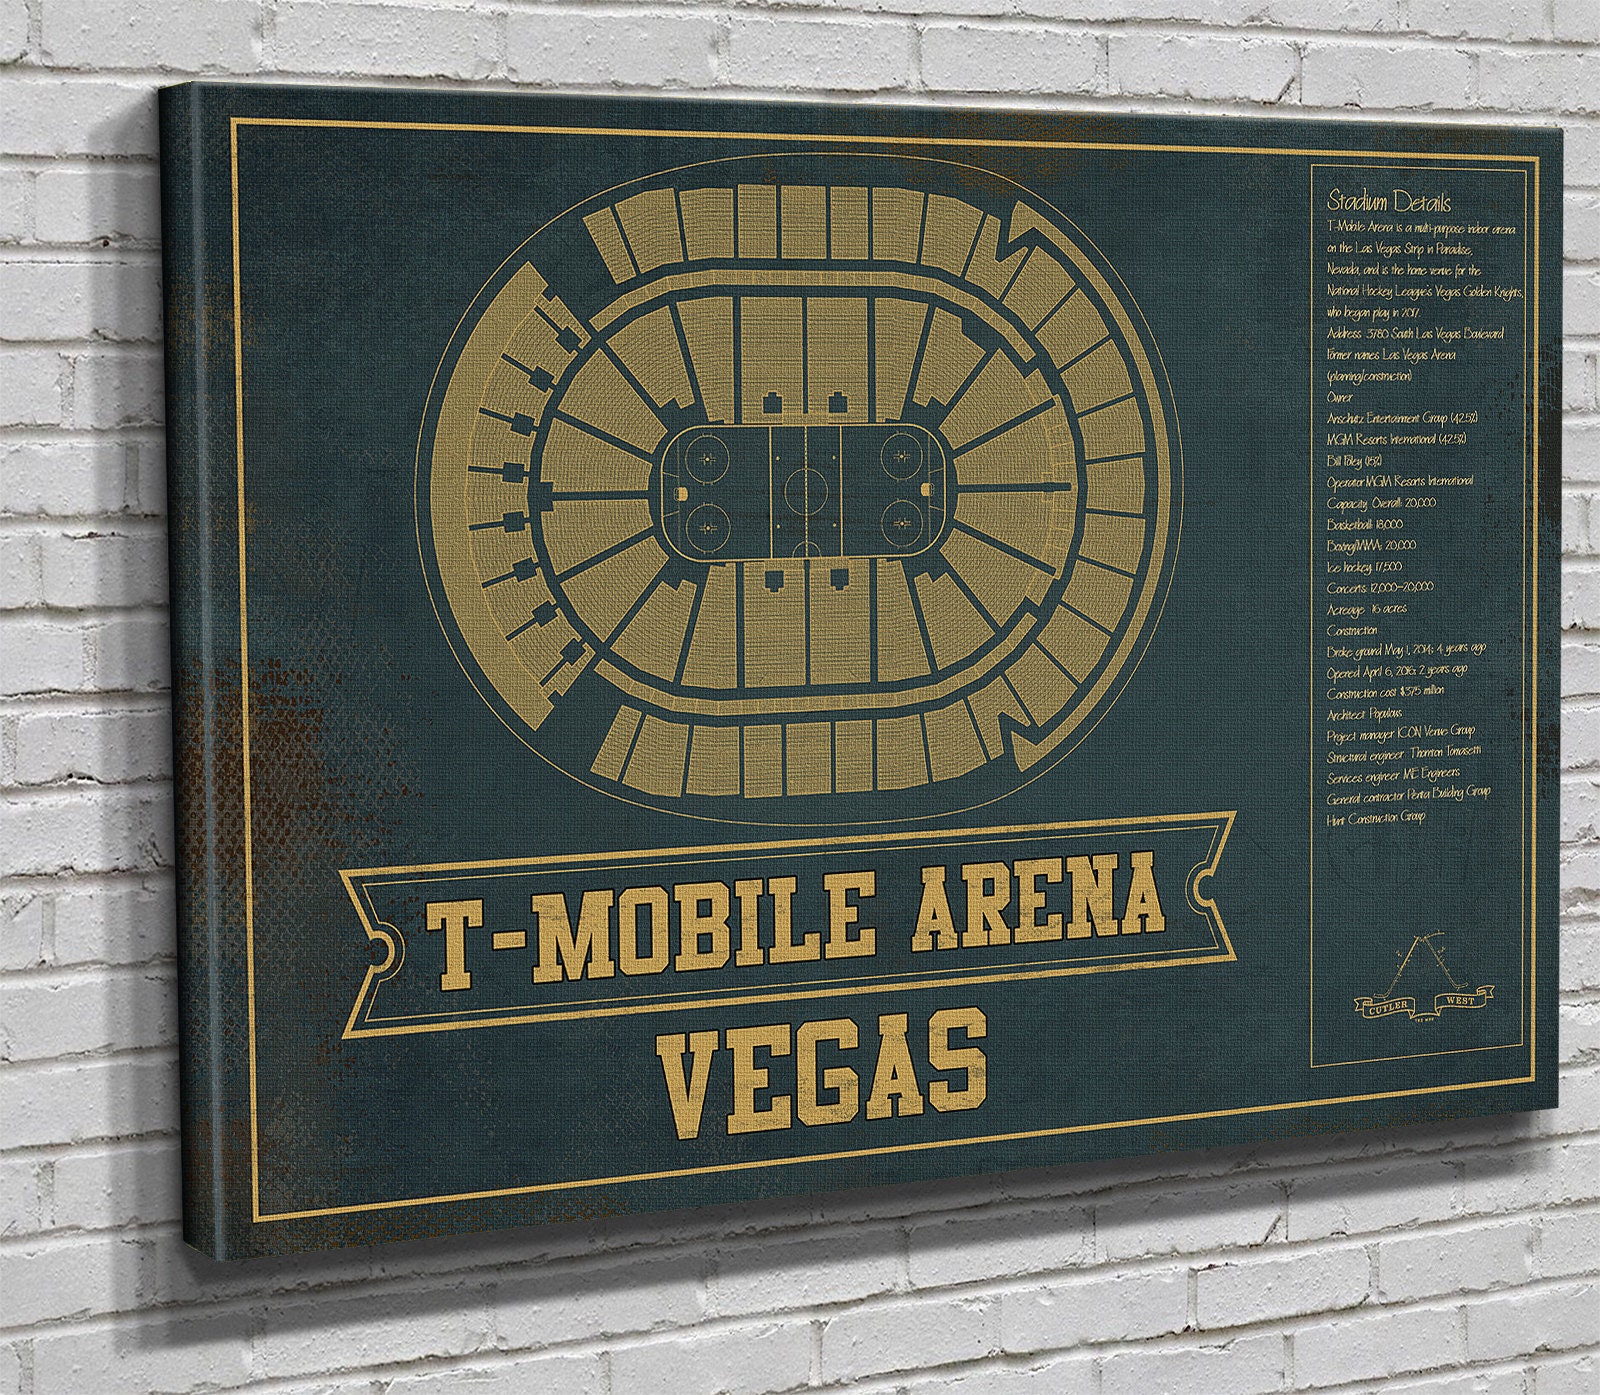 Las Vegas Knights Arena Seating Chart